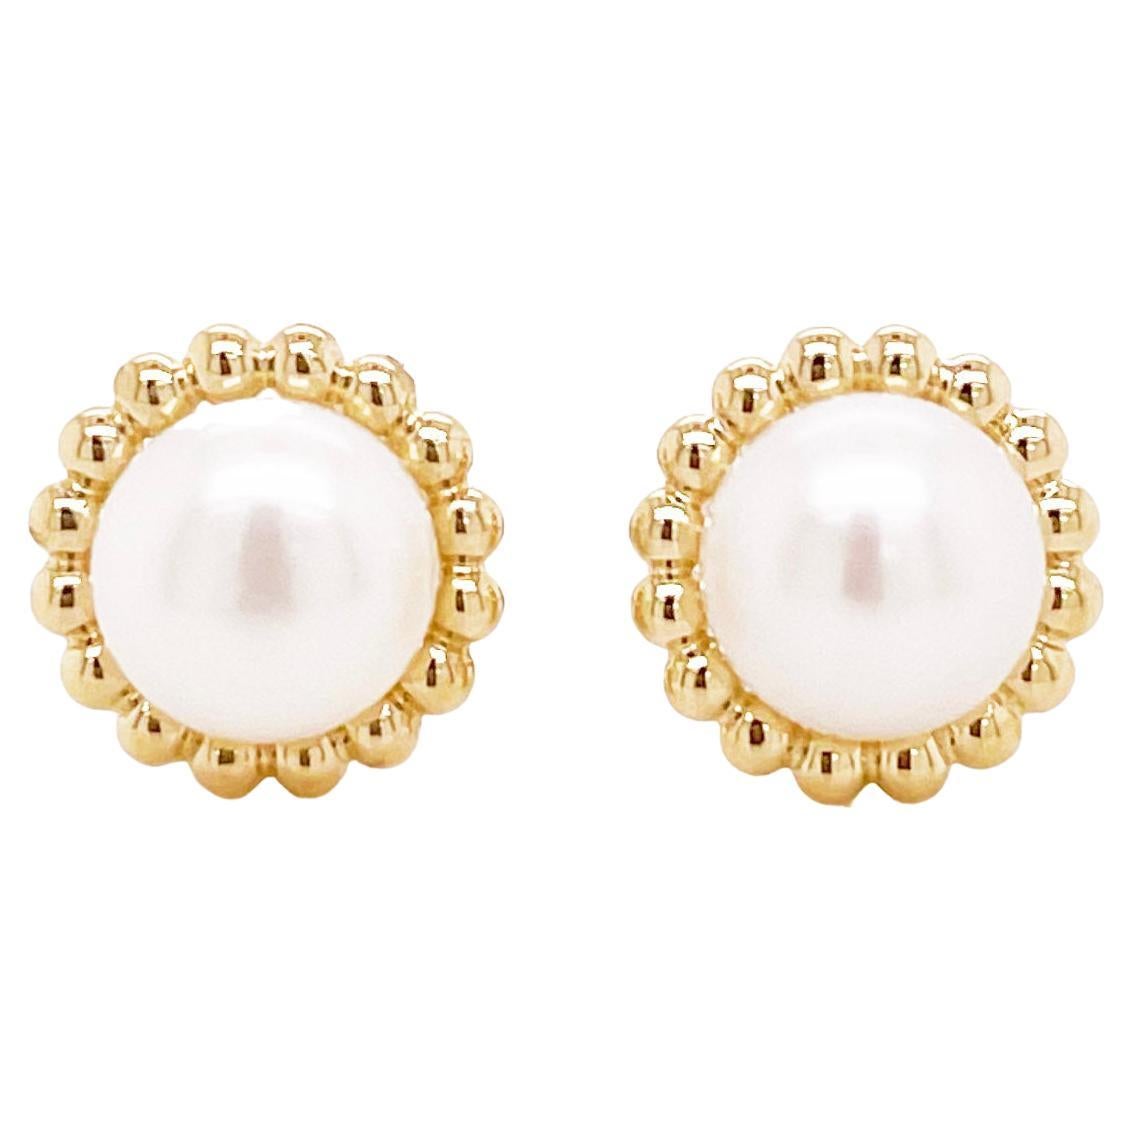 Gold Pearl Earrings Circular Vintage Inspired – QueenMee Accessories